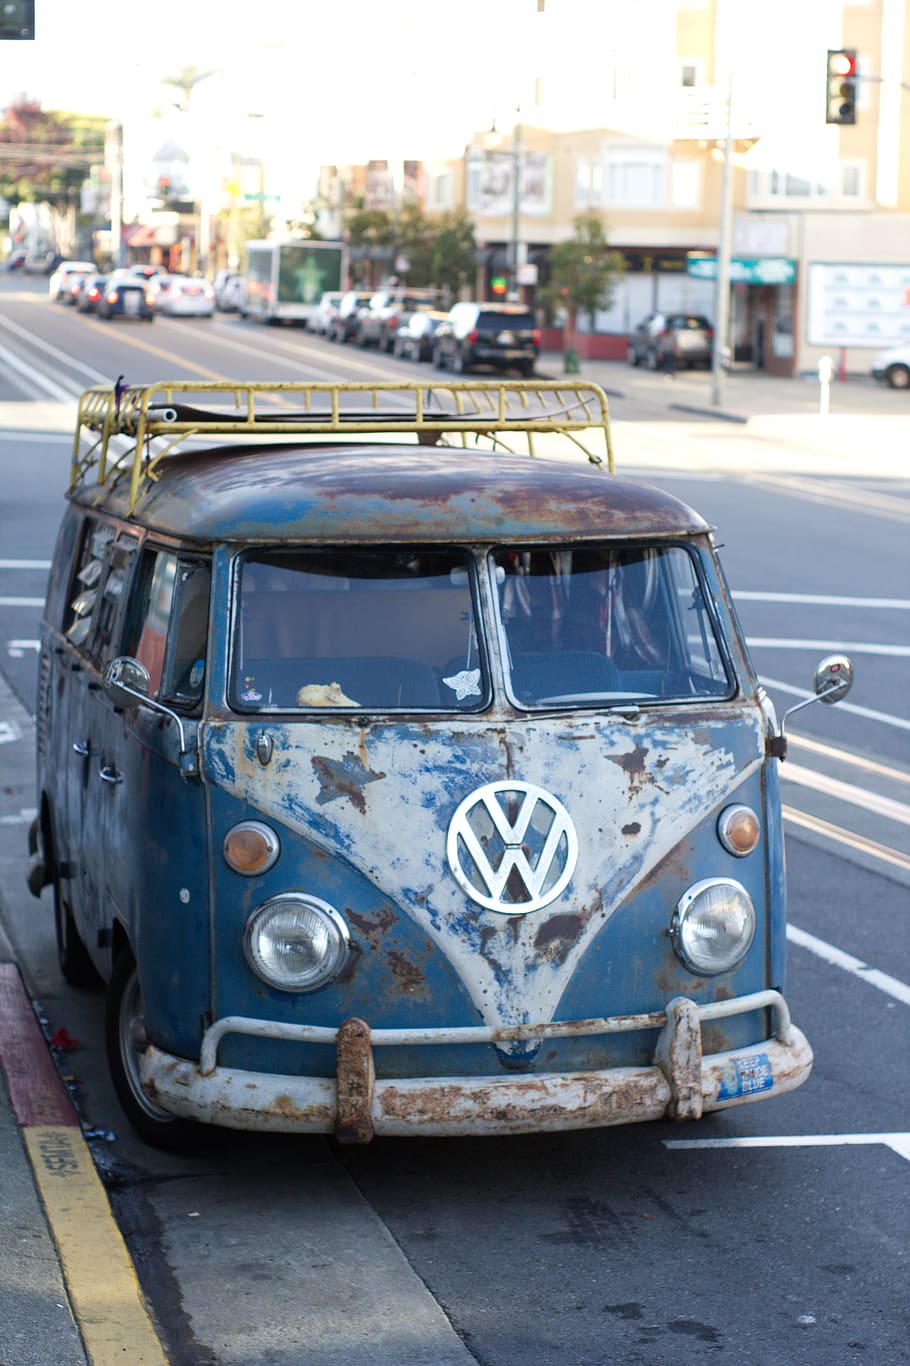 VW, bus, van, hippie, mode of transportation, city, motor vehicle